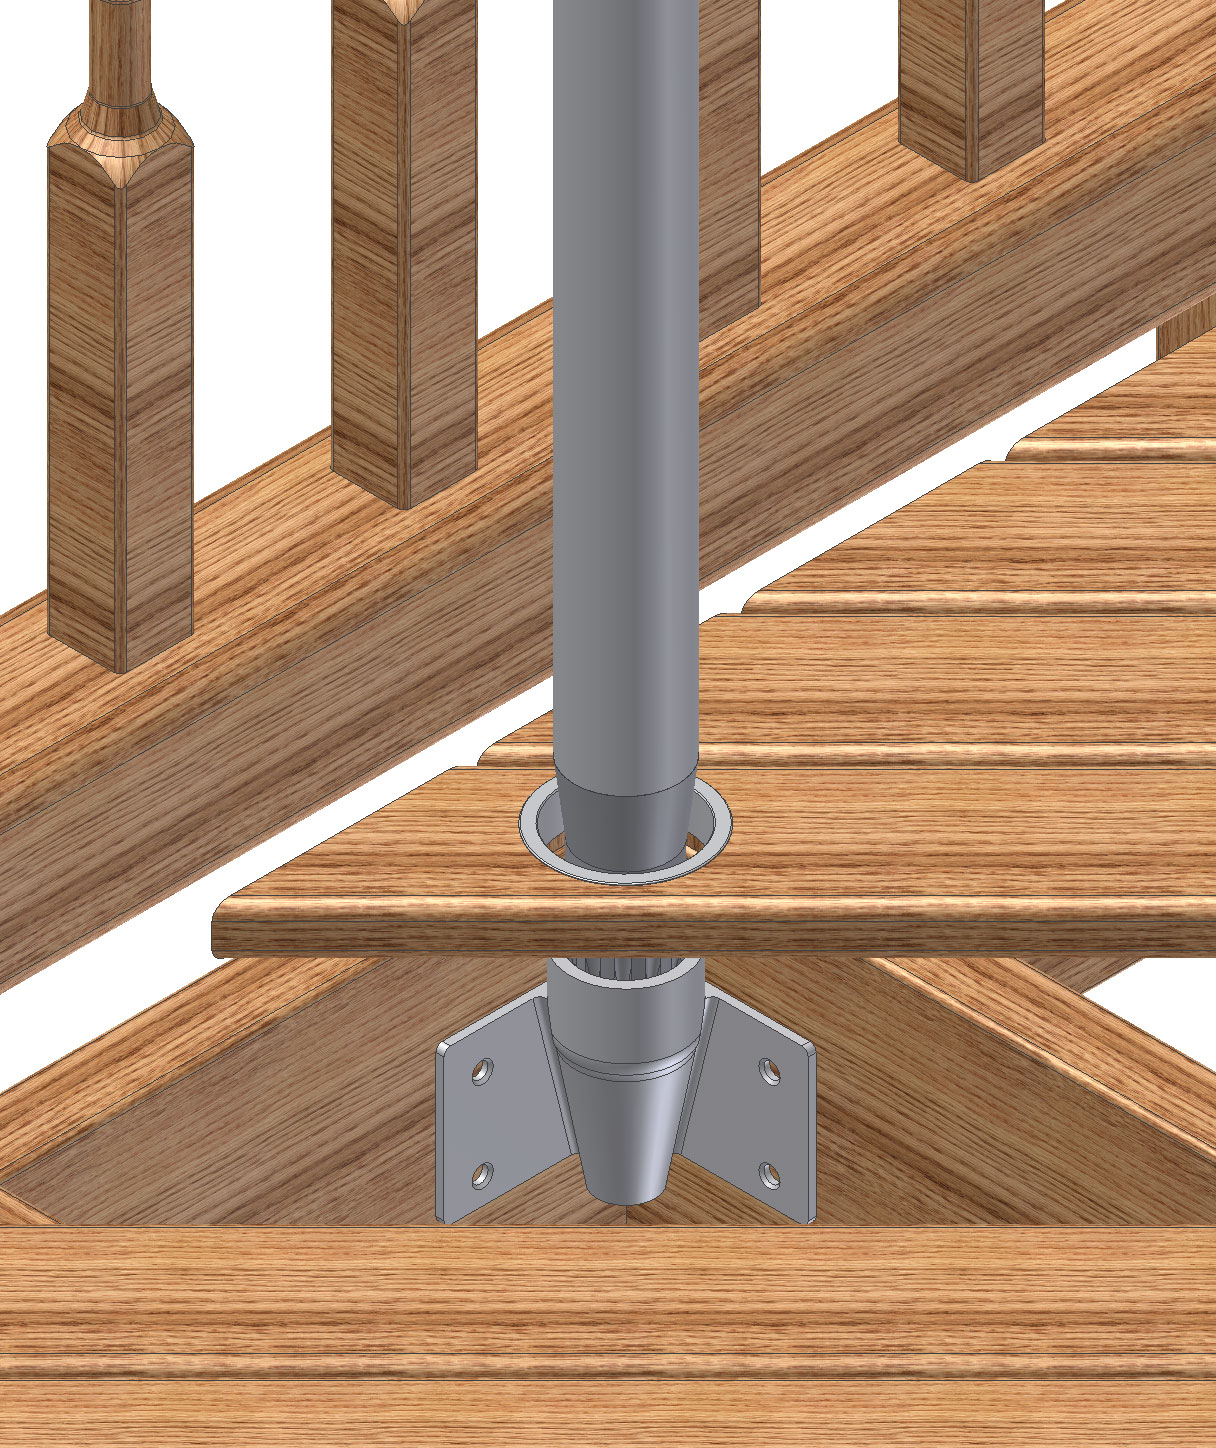 Deck'Umbs corner style, conical umbrella holder installed at the corner of decks